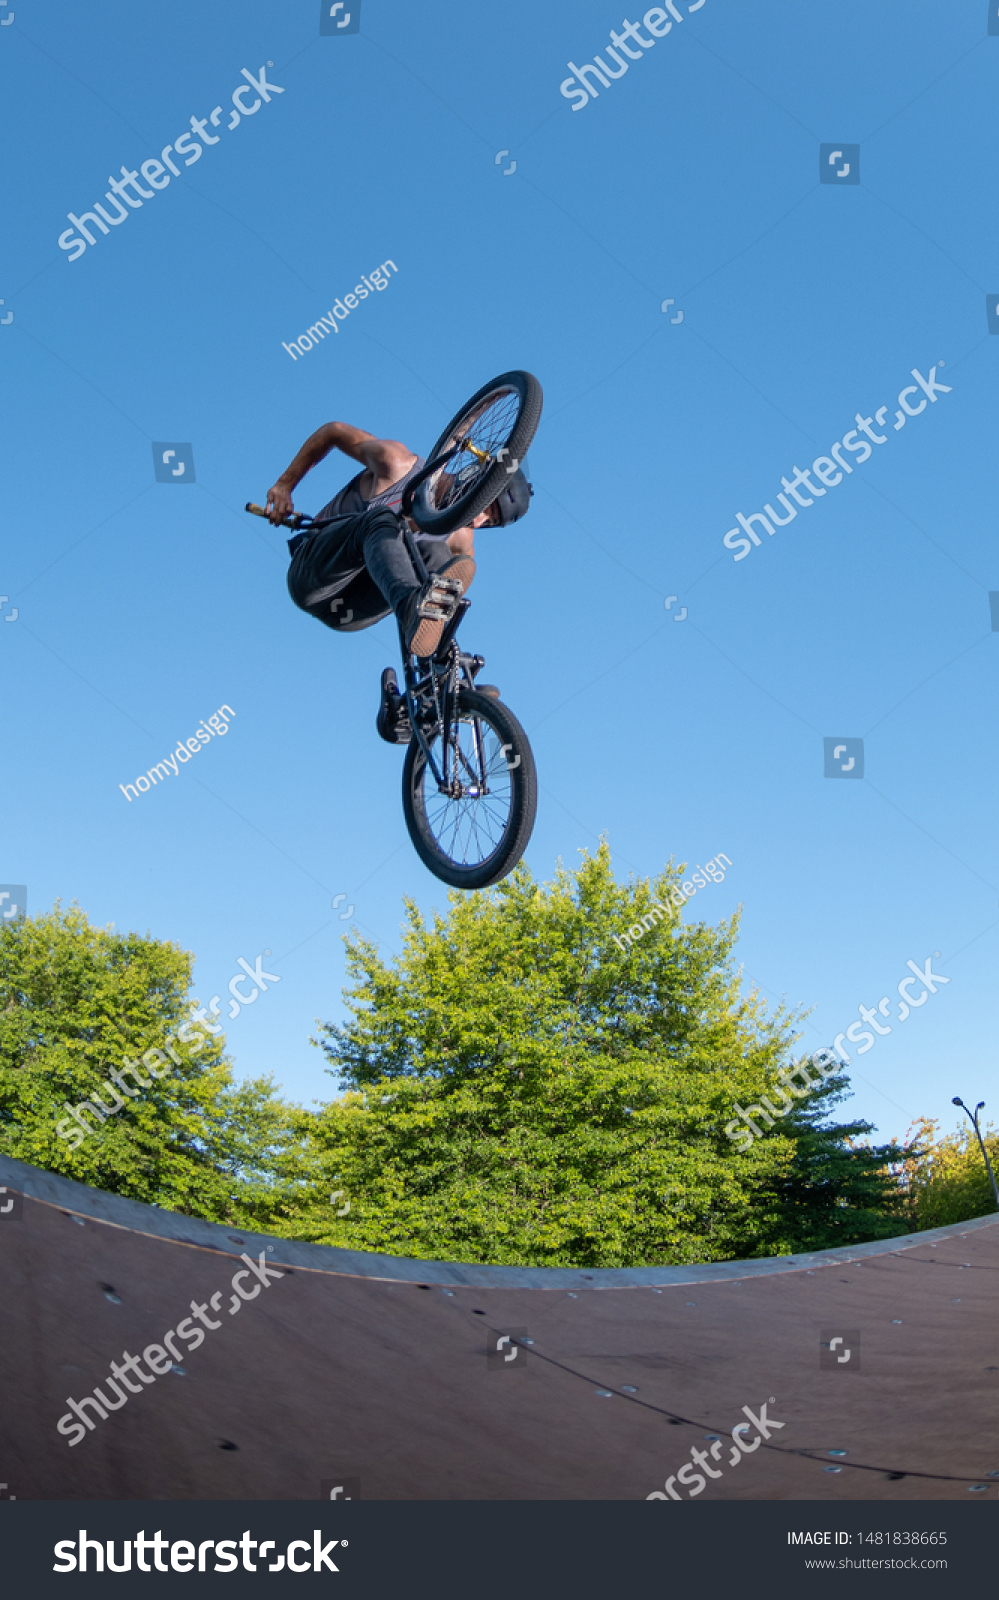 Biker jump high from jump box ramp performing big air trick. #1481838665